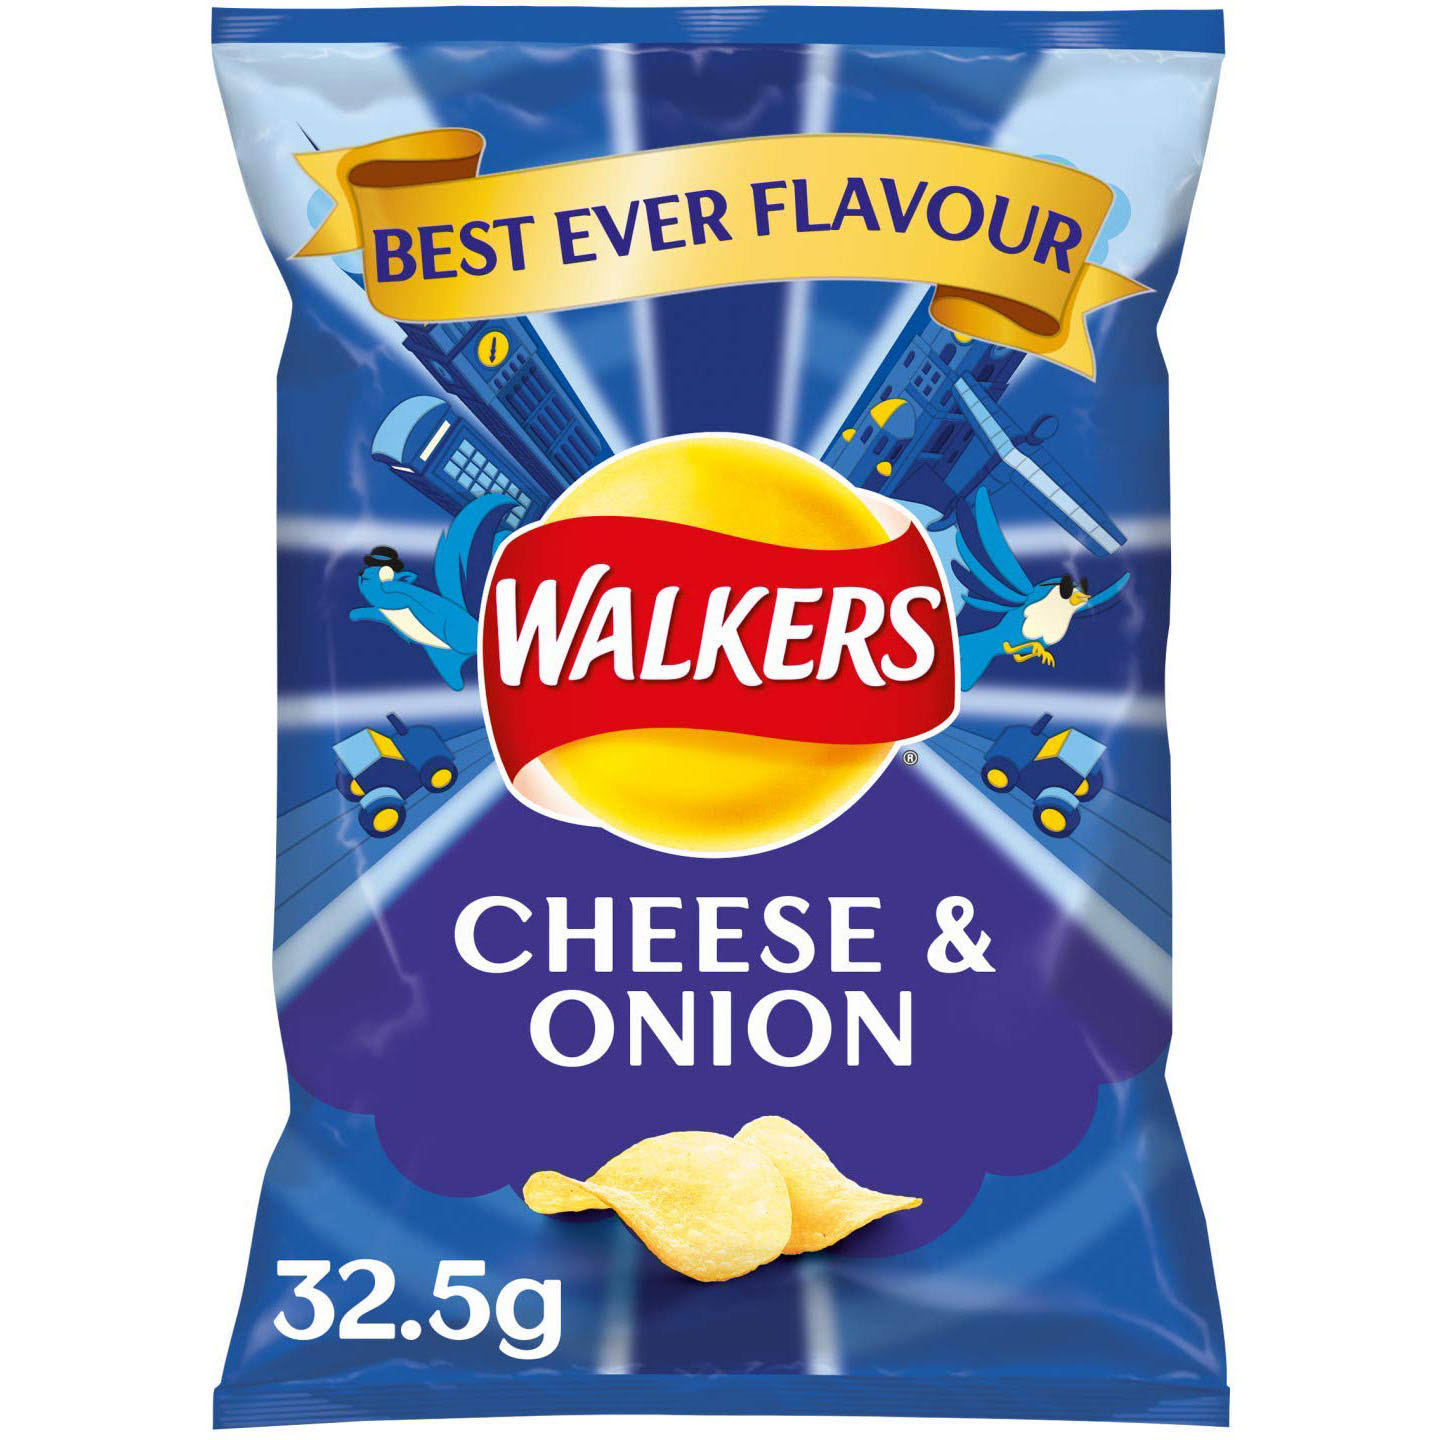 Walkers Crisps - Cheese & Onion